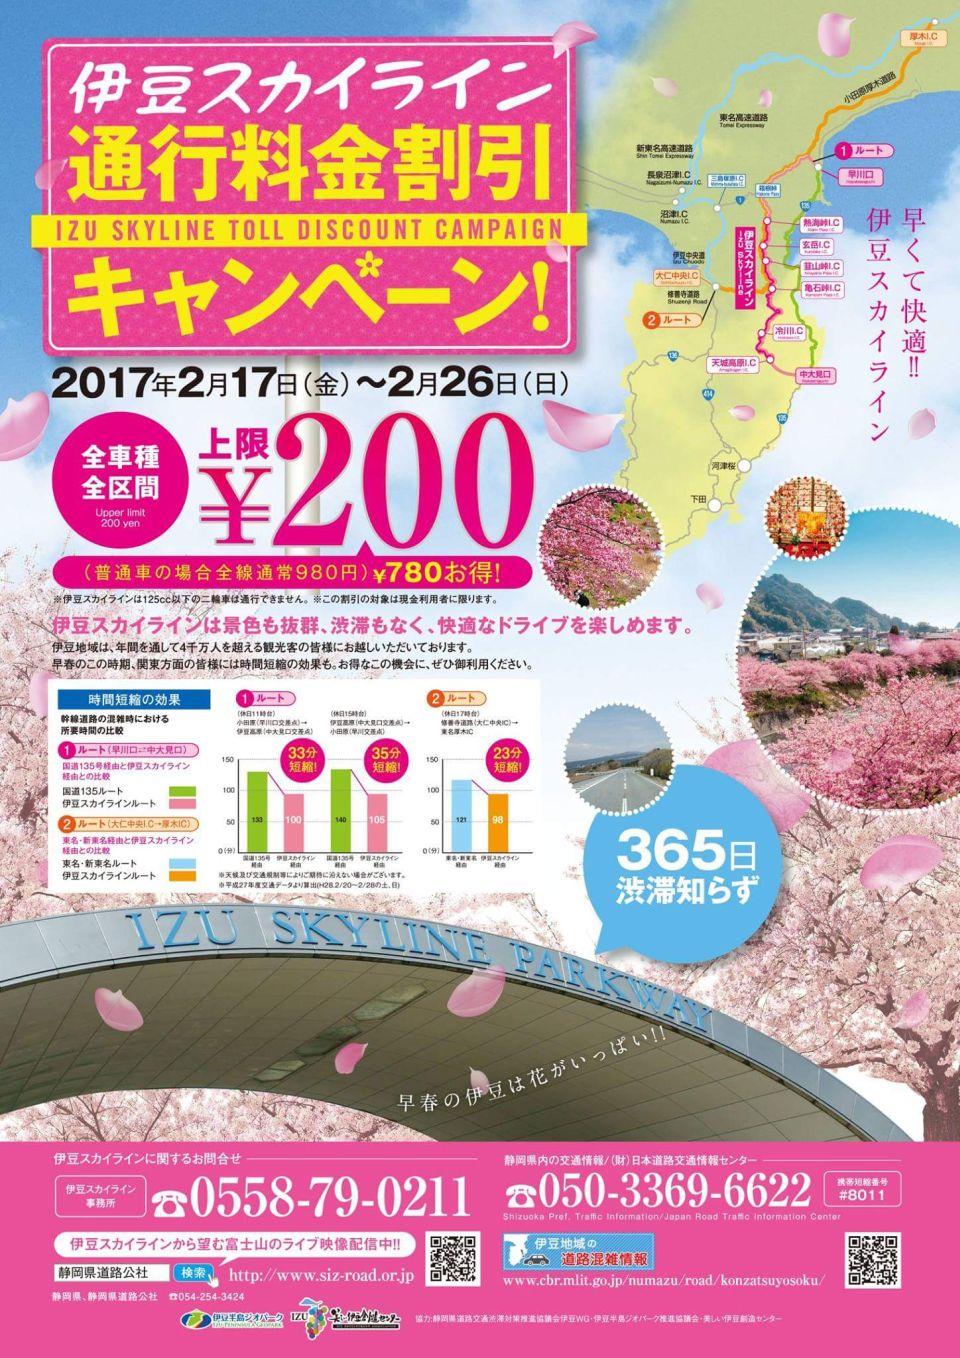 2017 Izu Skyline Discount Campaign